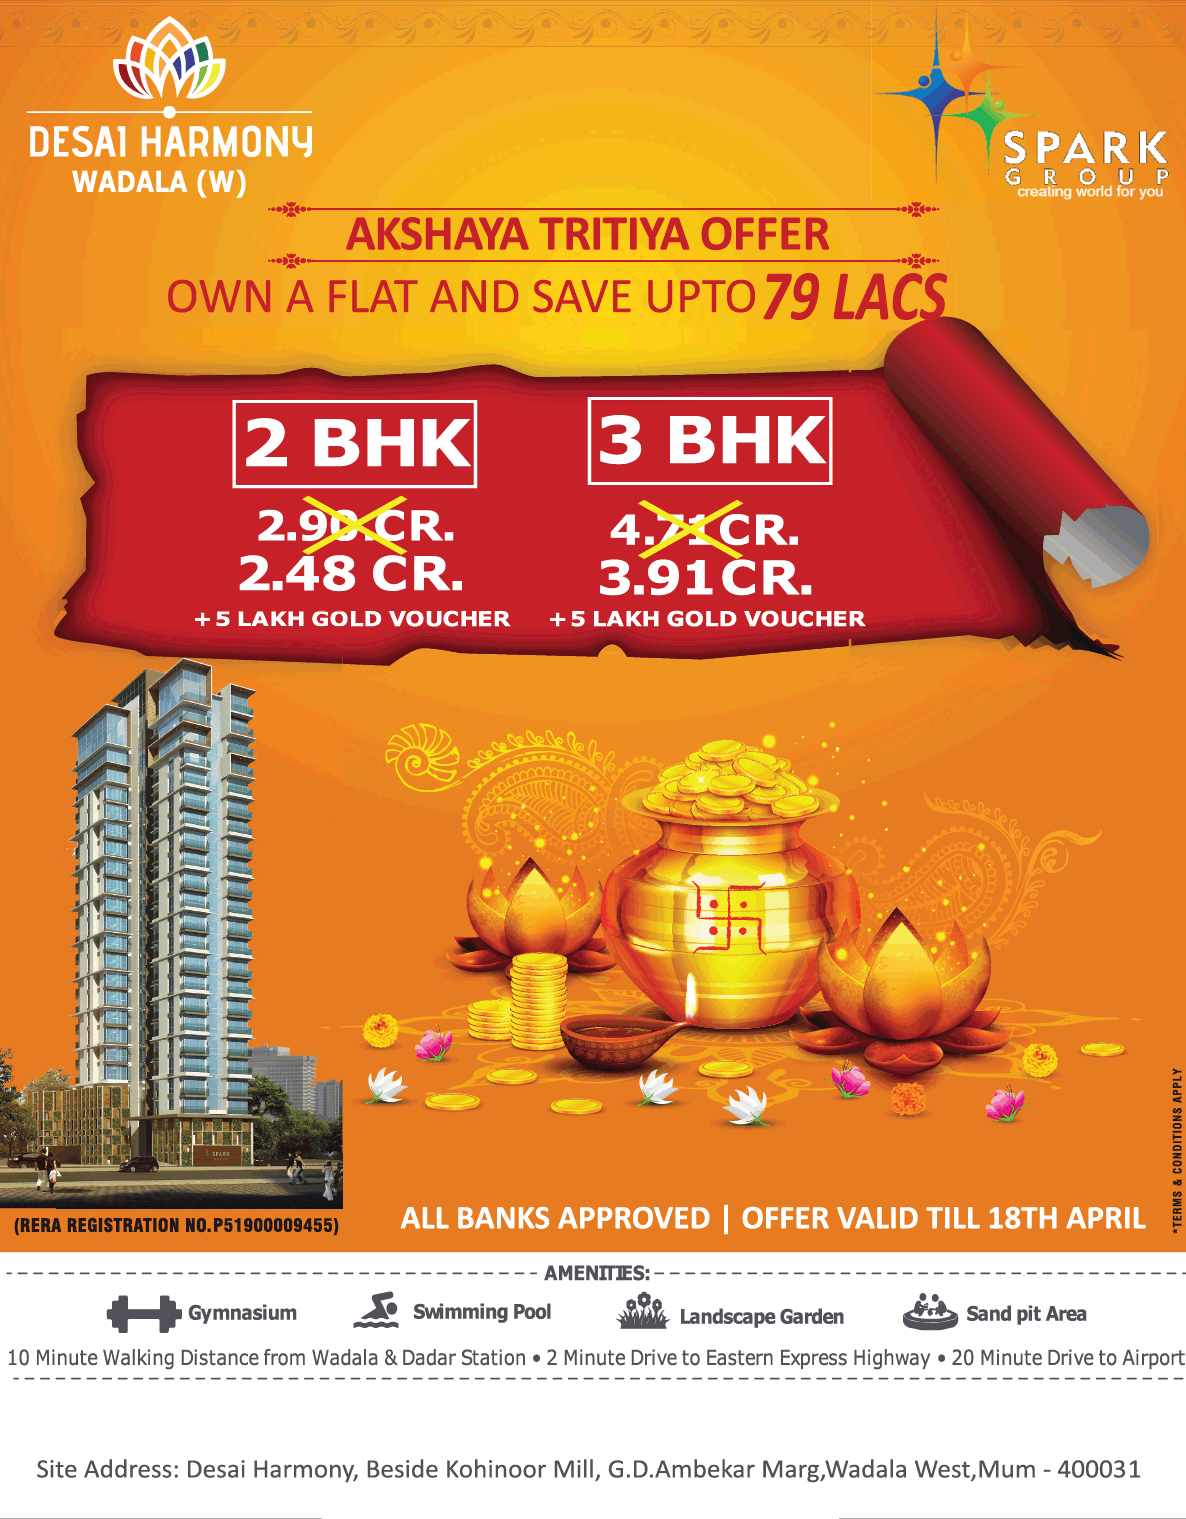 Own a flat & save up to Rs. 79 Lacs during Akshaya Tritiya Offer at Spark Desai Harmony in Mumbai